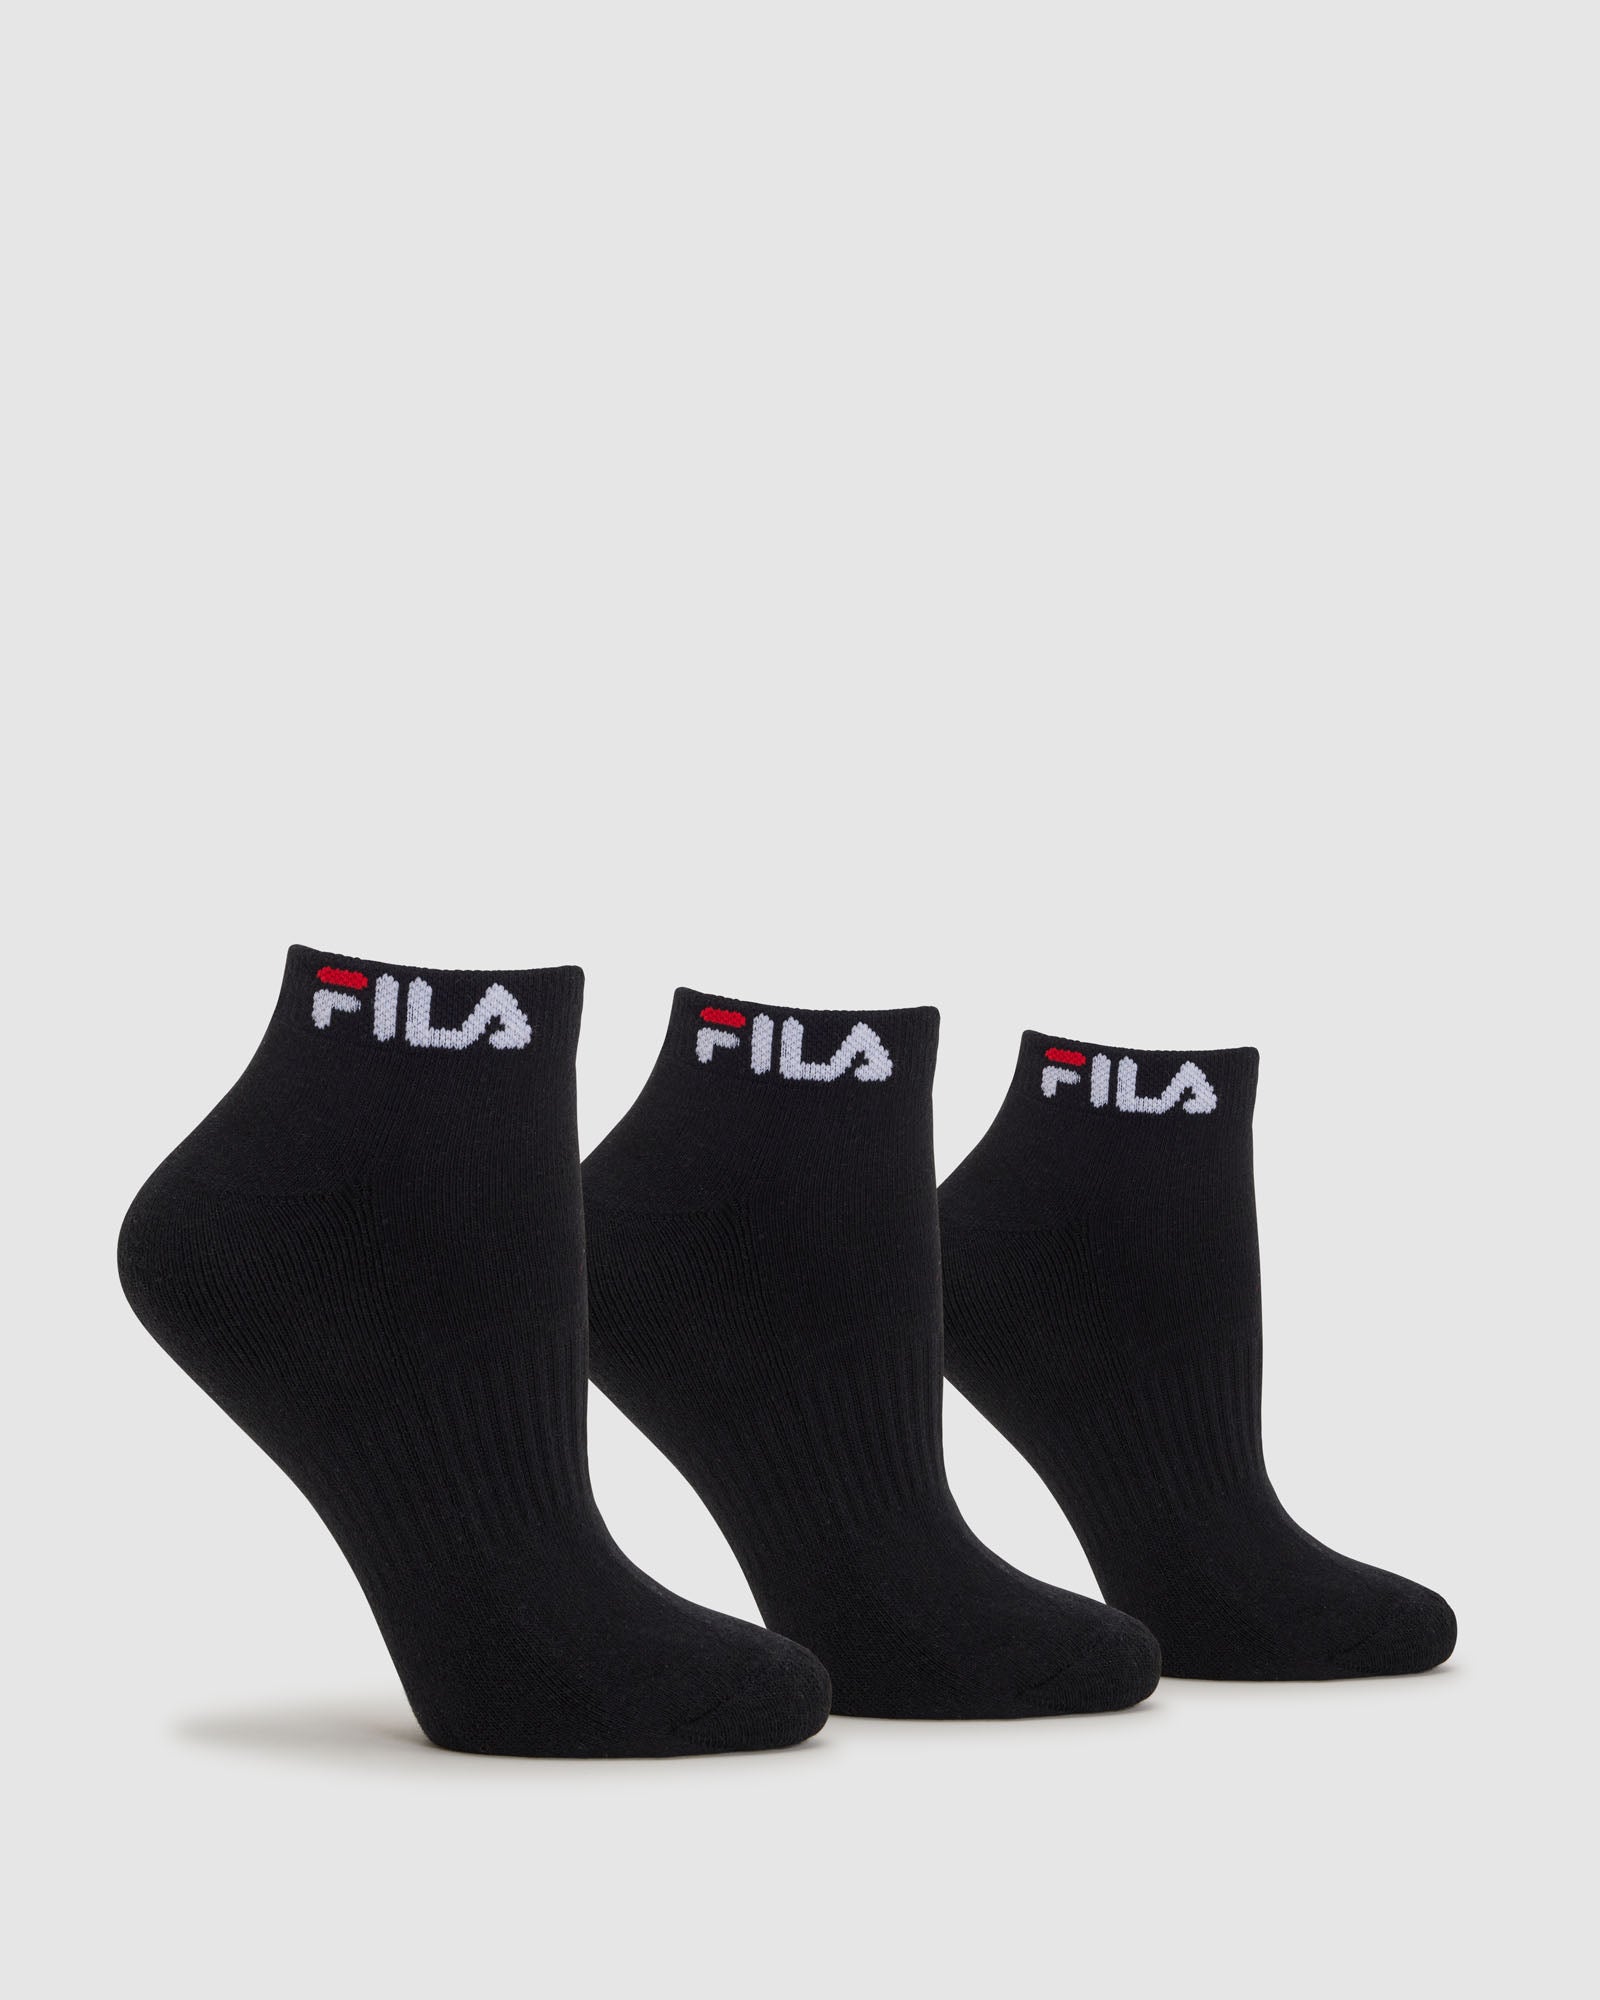 Unisex Ped Socks 3pk | FILA Australia